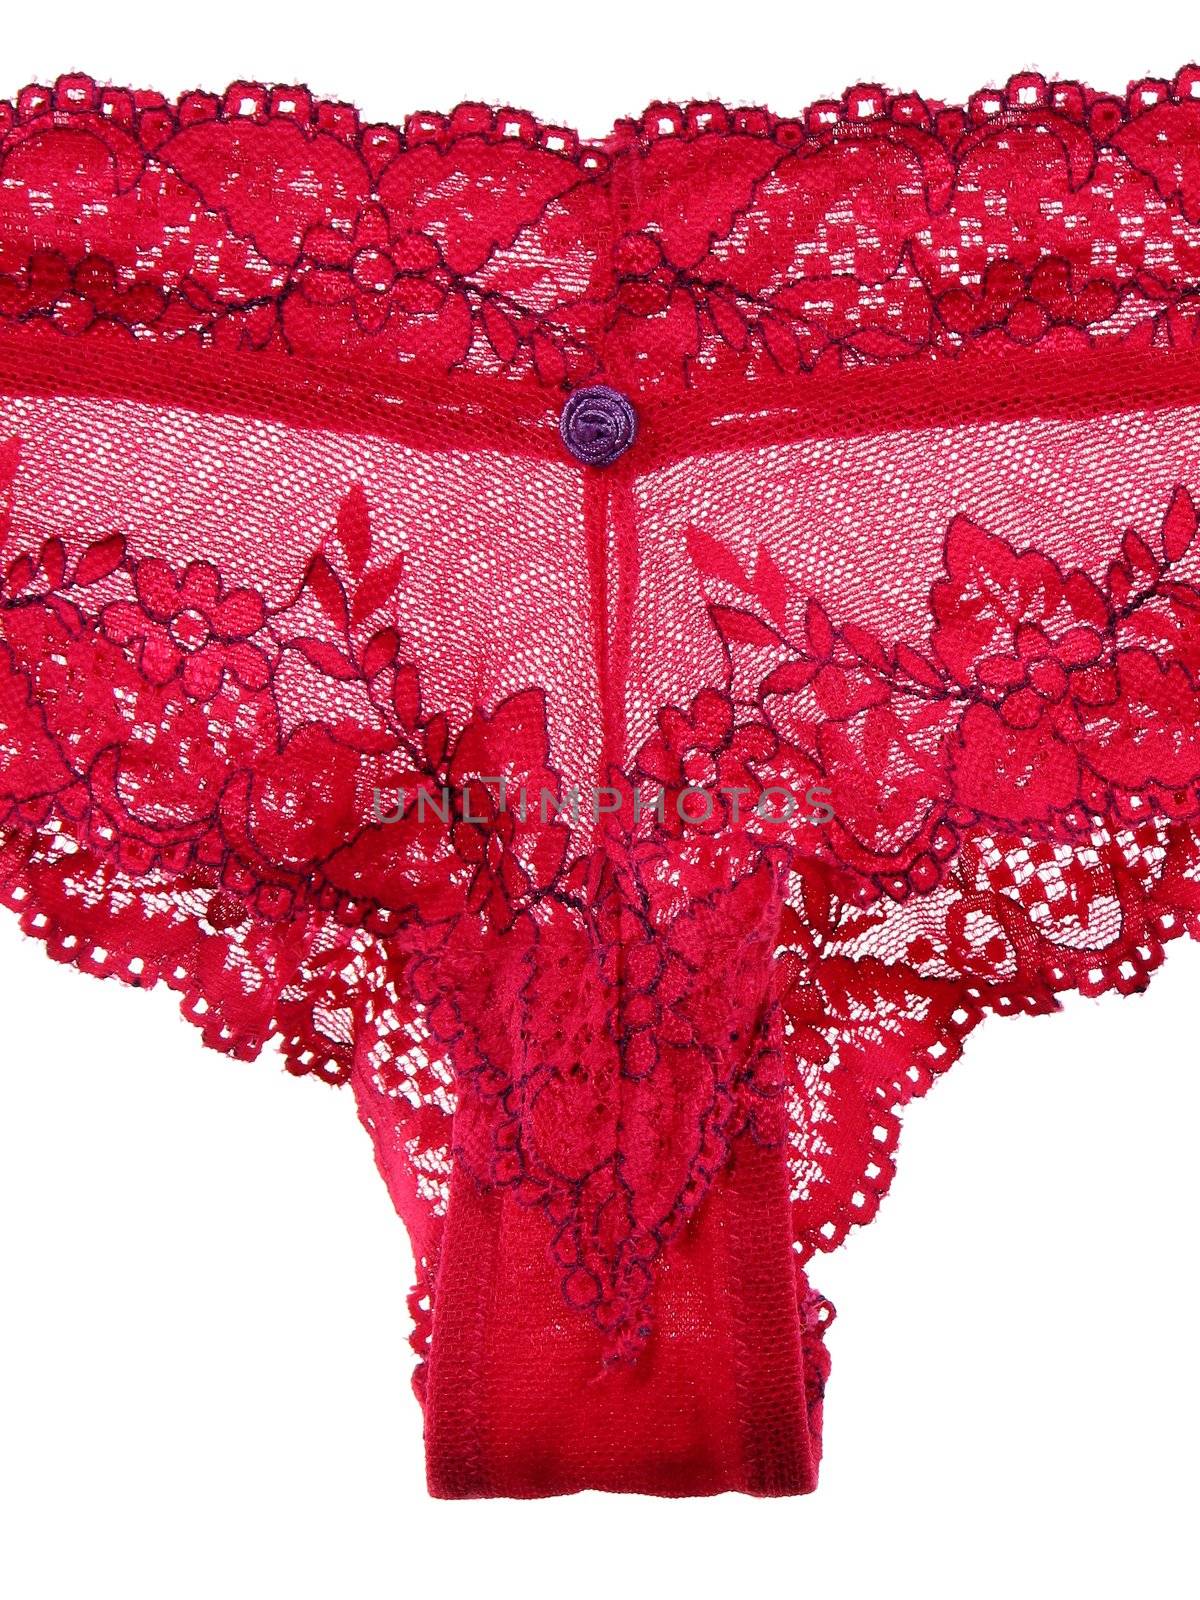 Red lacy panties by anikasalsera